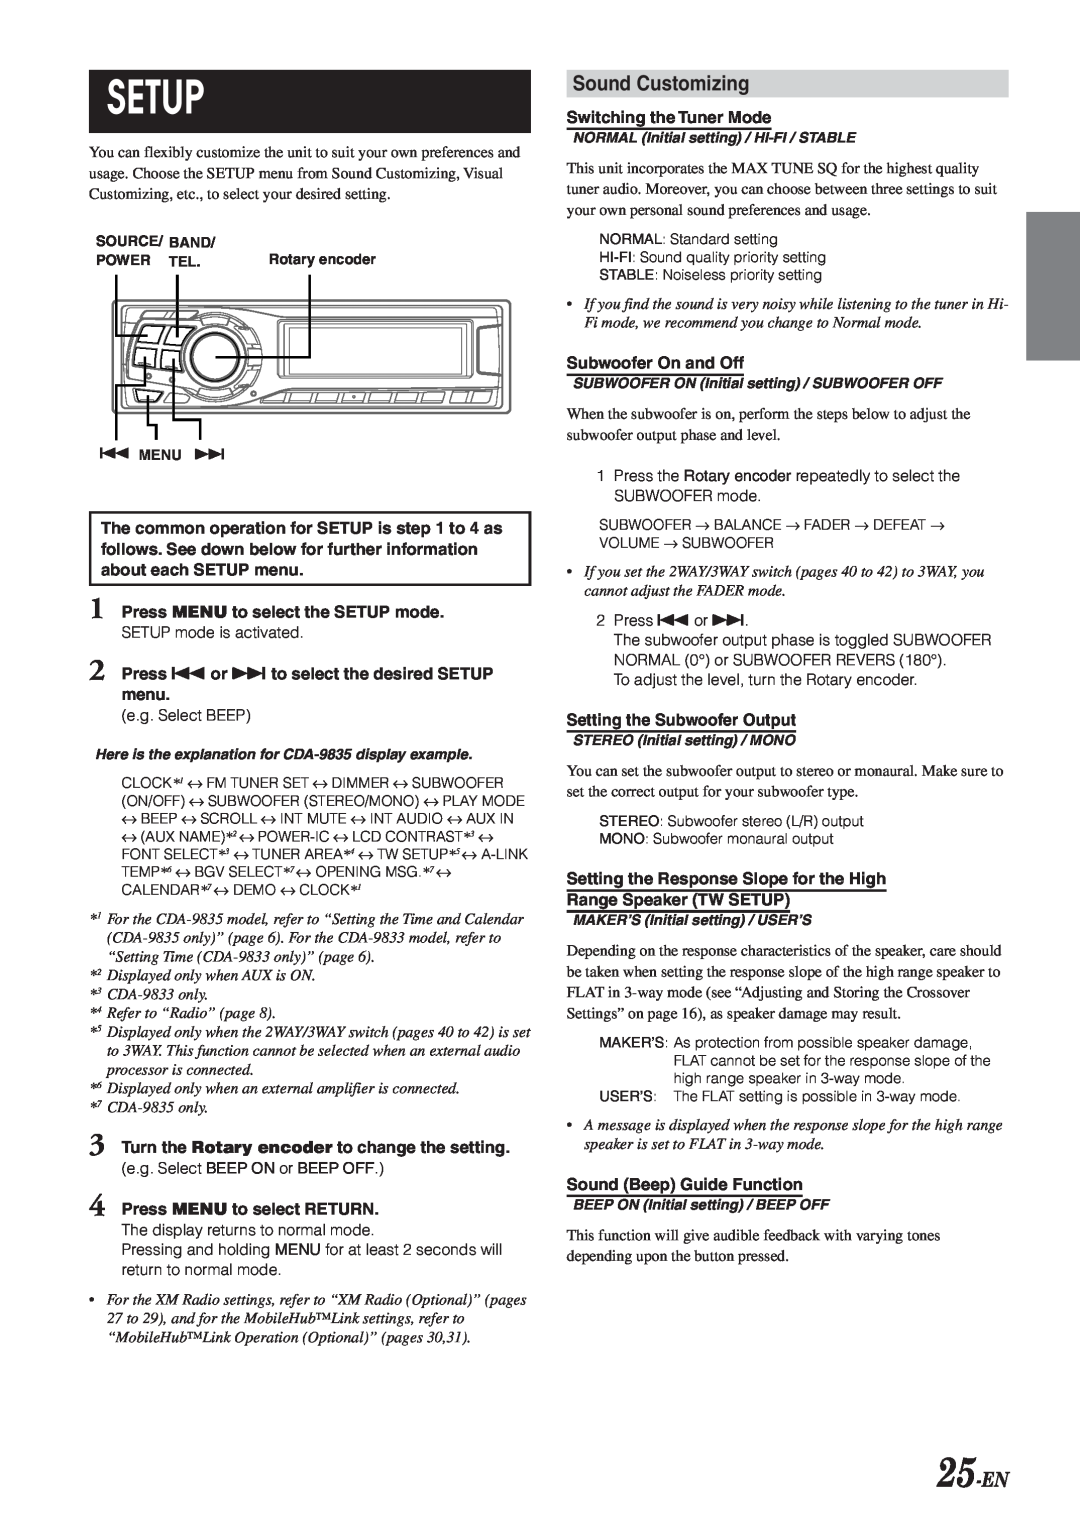 Alpine CDA-9833 owner manual Setup, Sound Customizing, 25-EN 